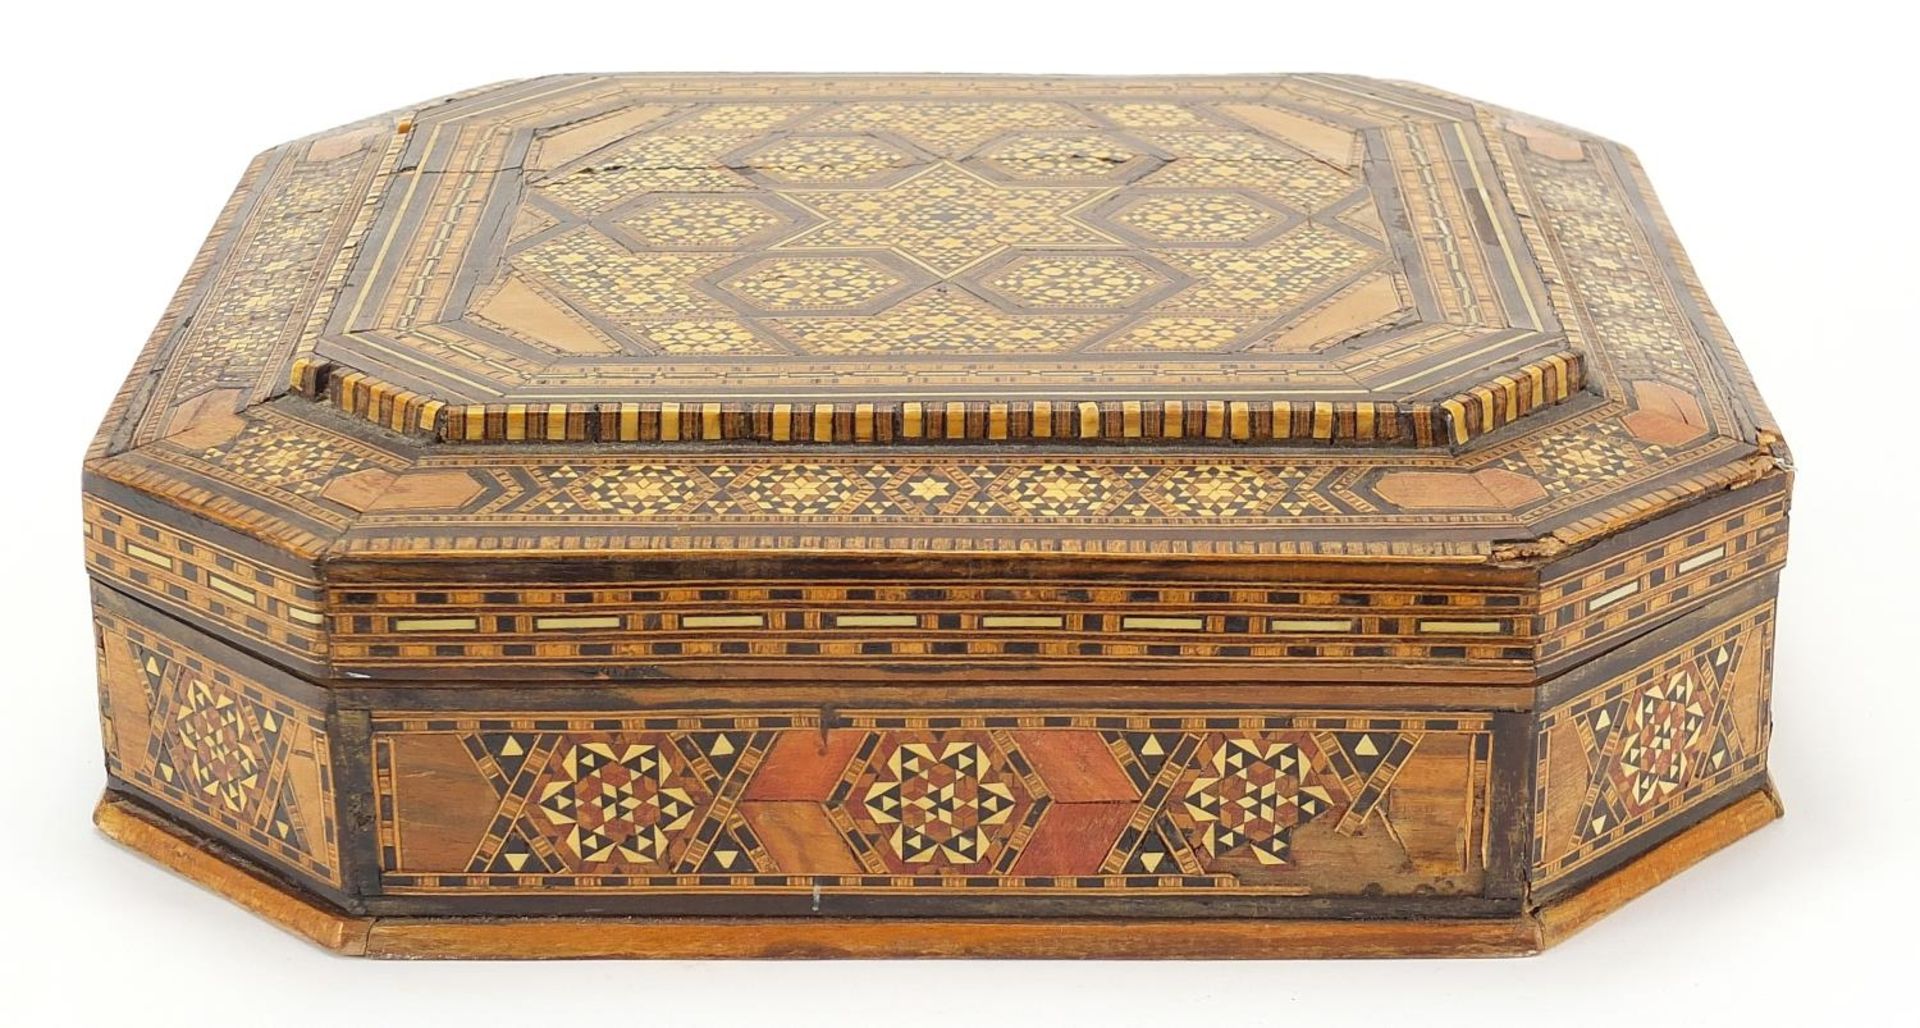 Syrian Moorish design casket with floral inlay, 8.5cm H x 28.5cm W x 29.5cm D - Image 6 of 8